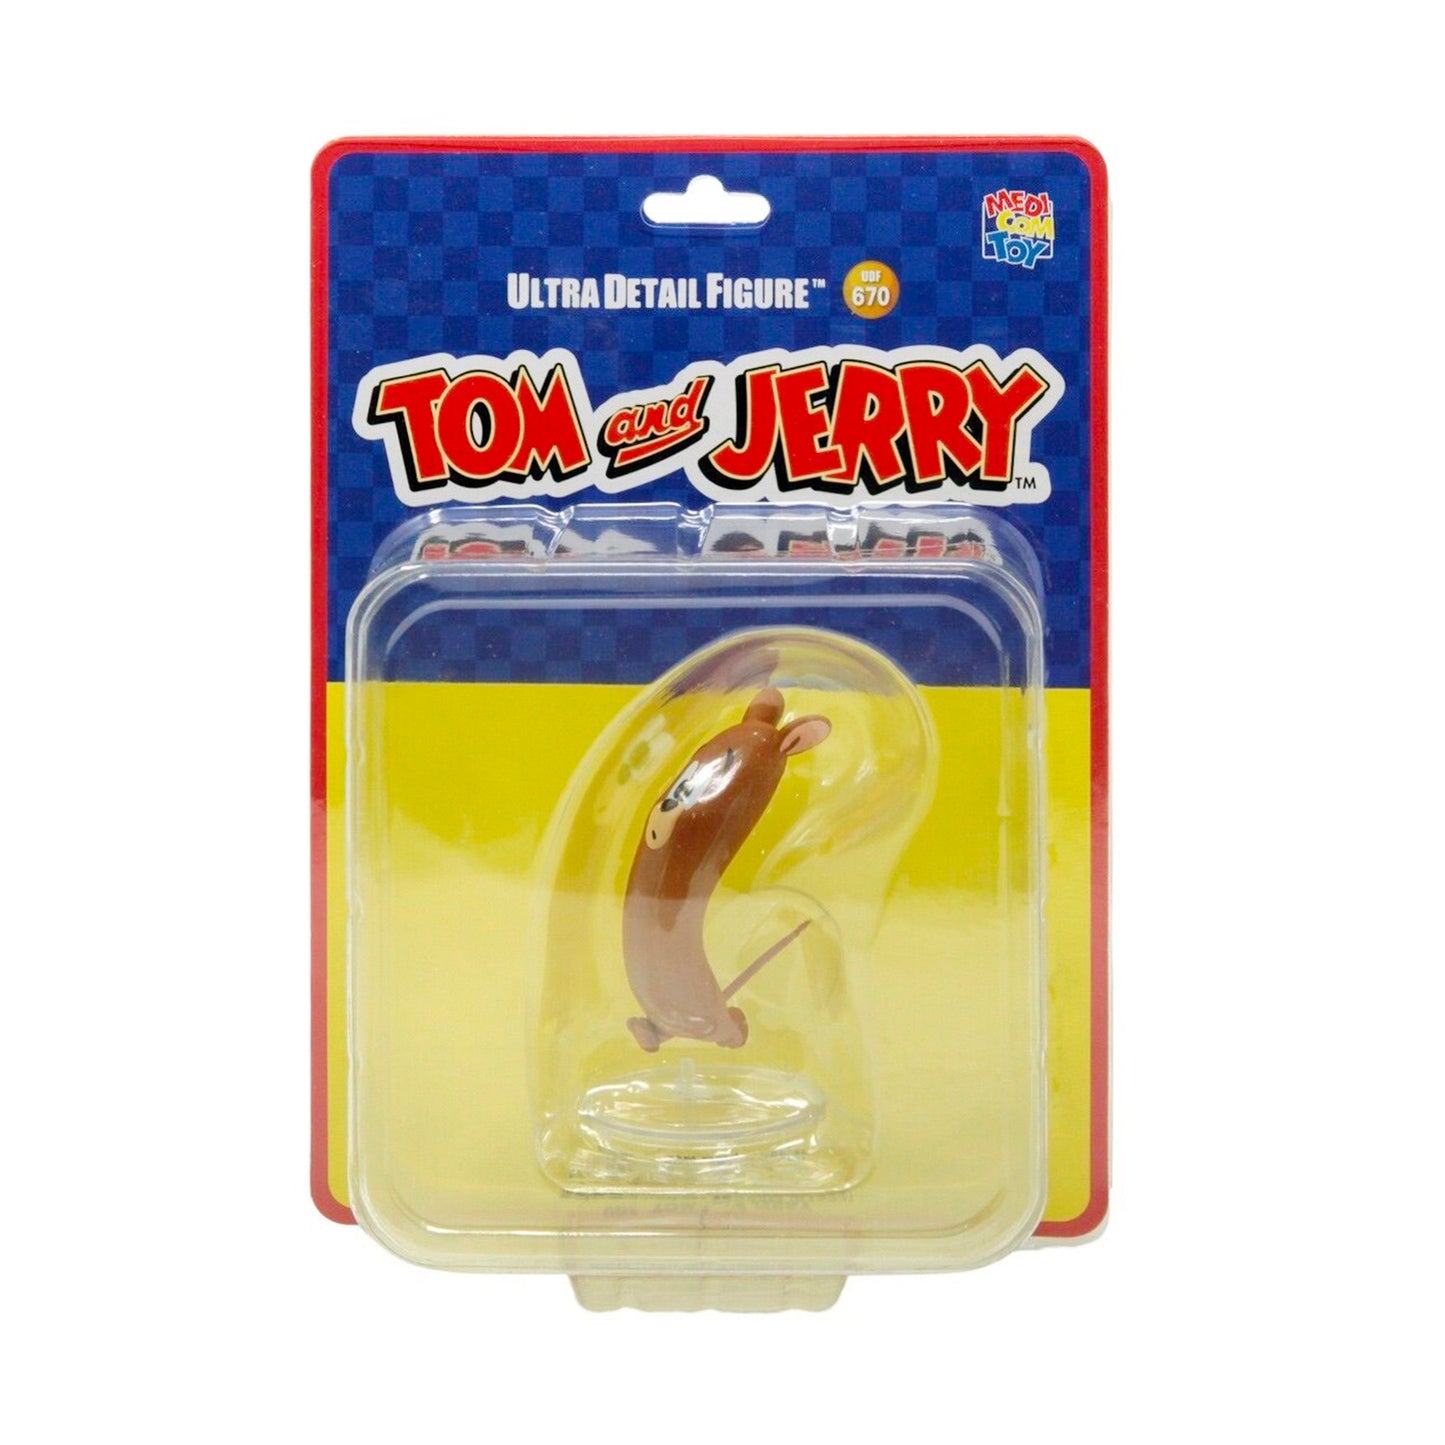 MEDICOM TOY: UDF - Tom & Jerry - Jerry Sausage Figure